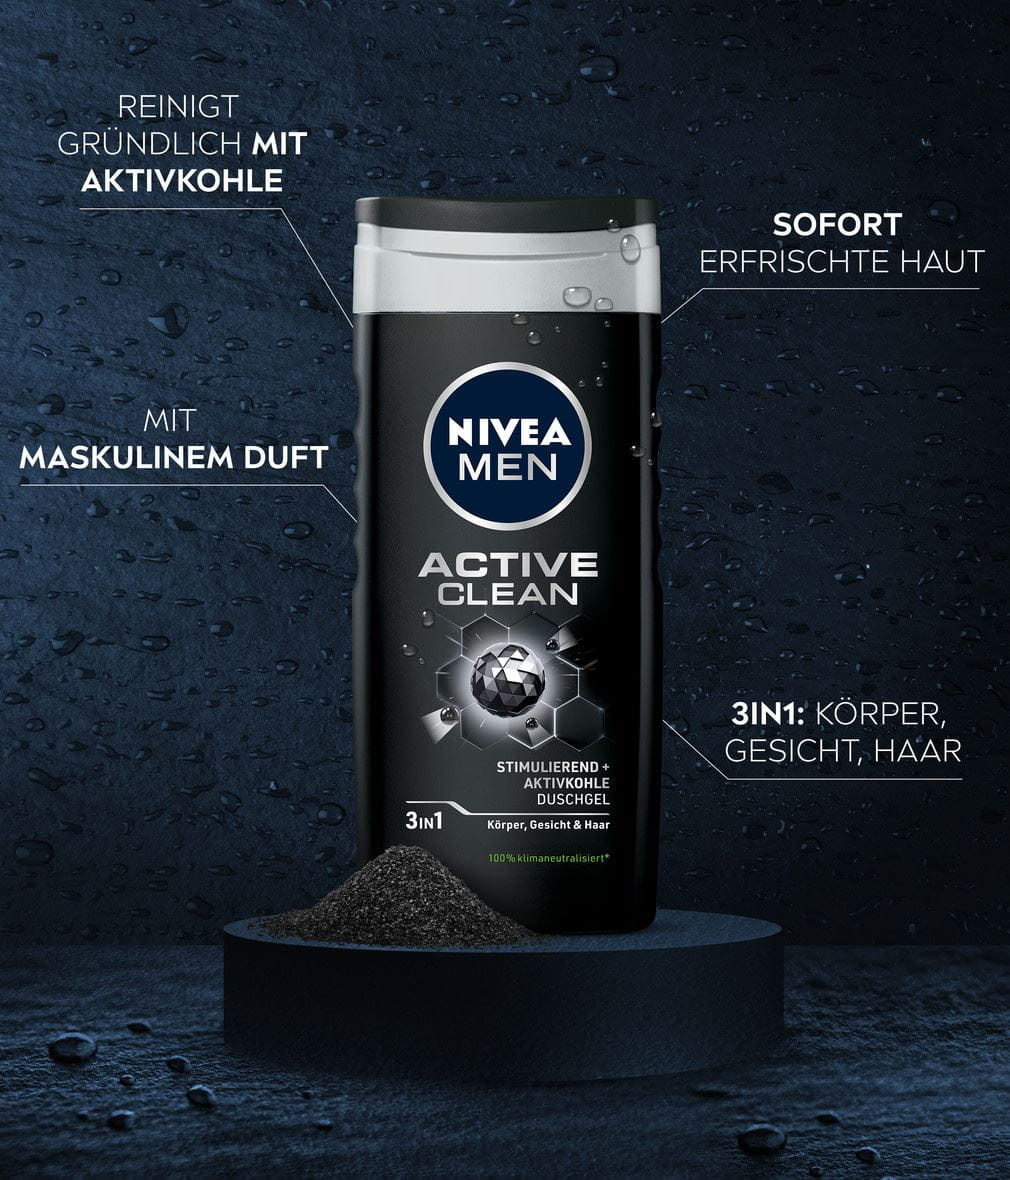 NIVEA MEN ACTIVE CLEAN Aktivkohle Duschgel Benefits